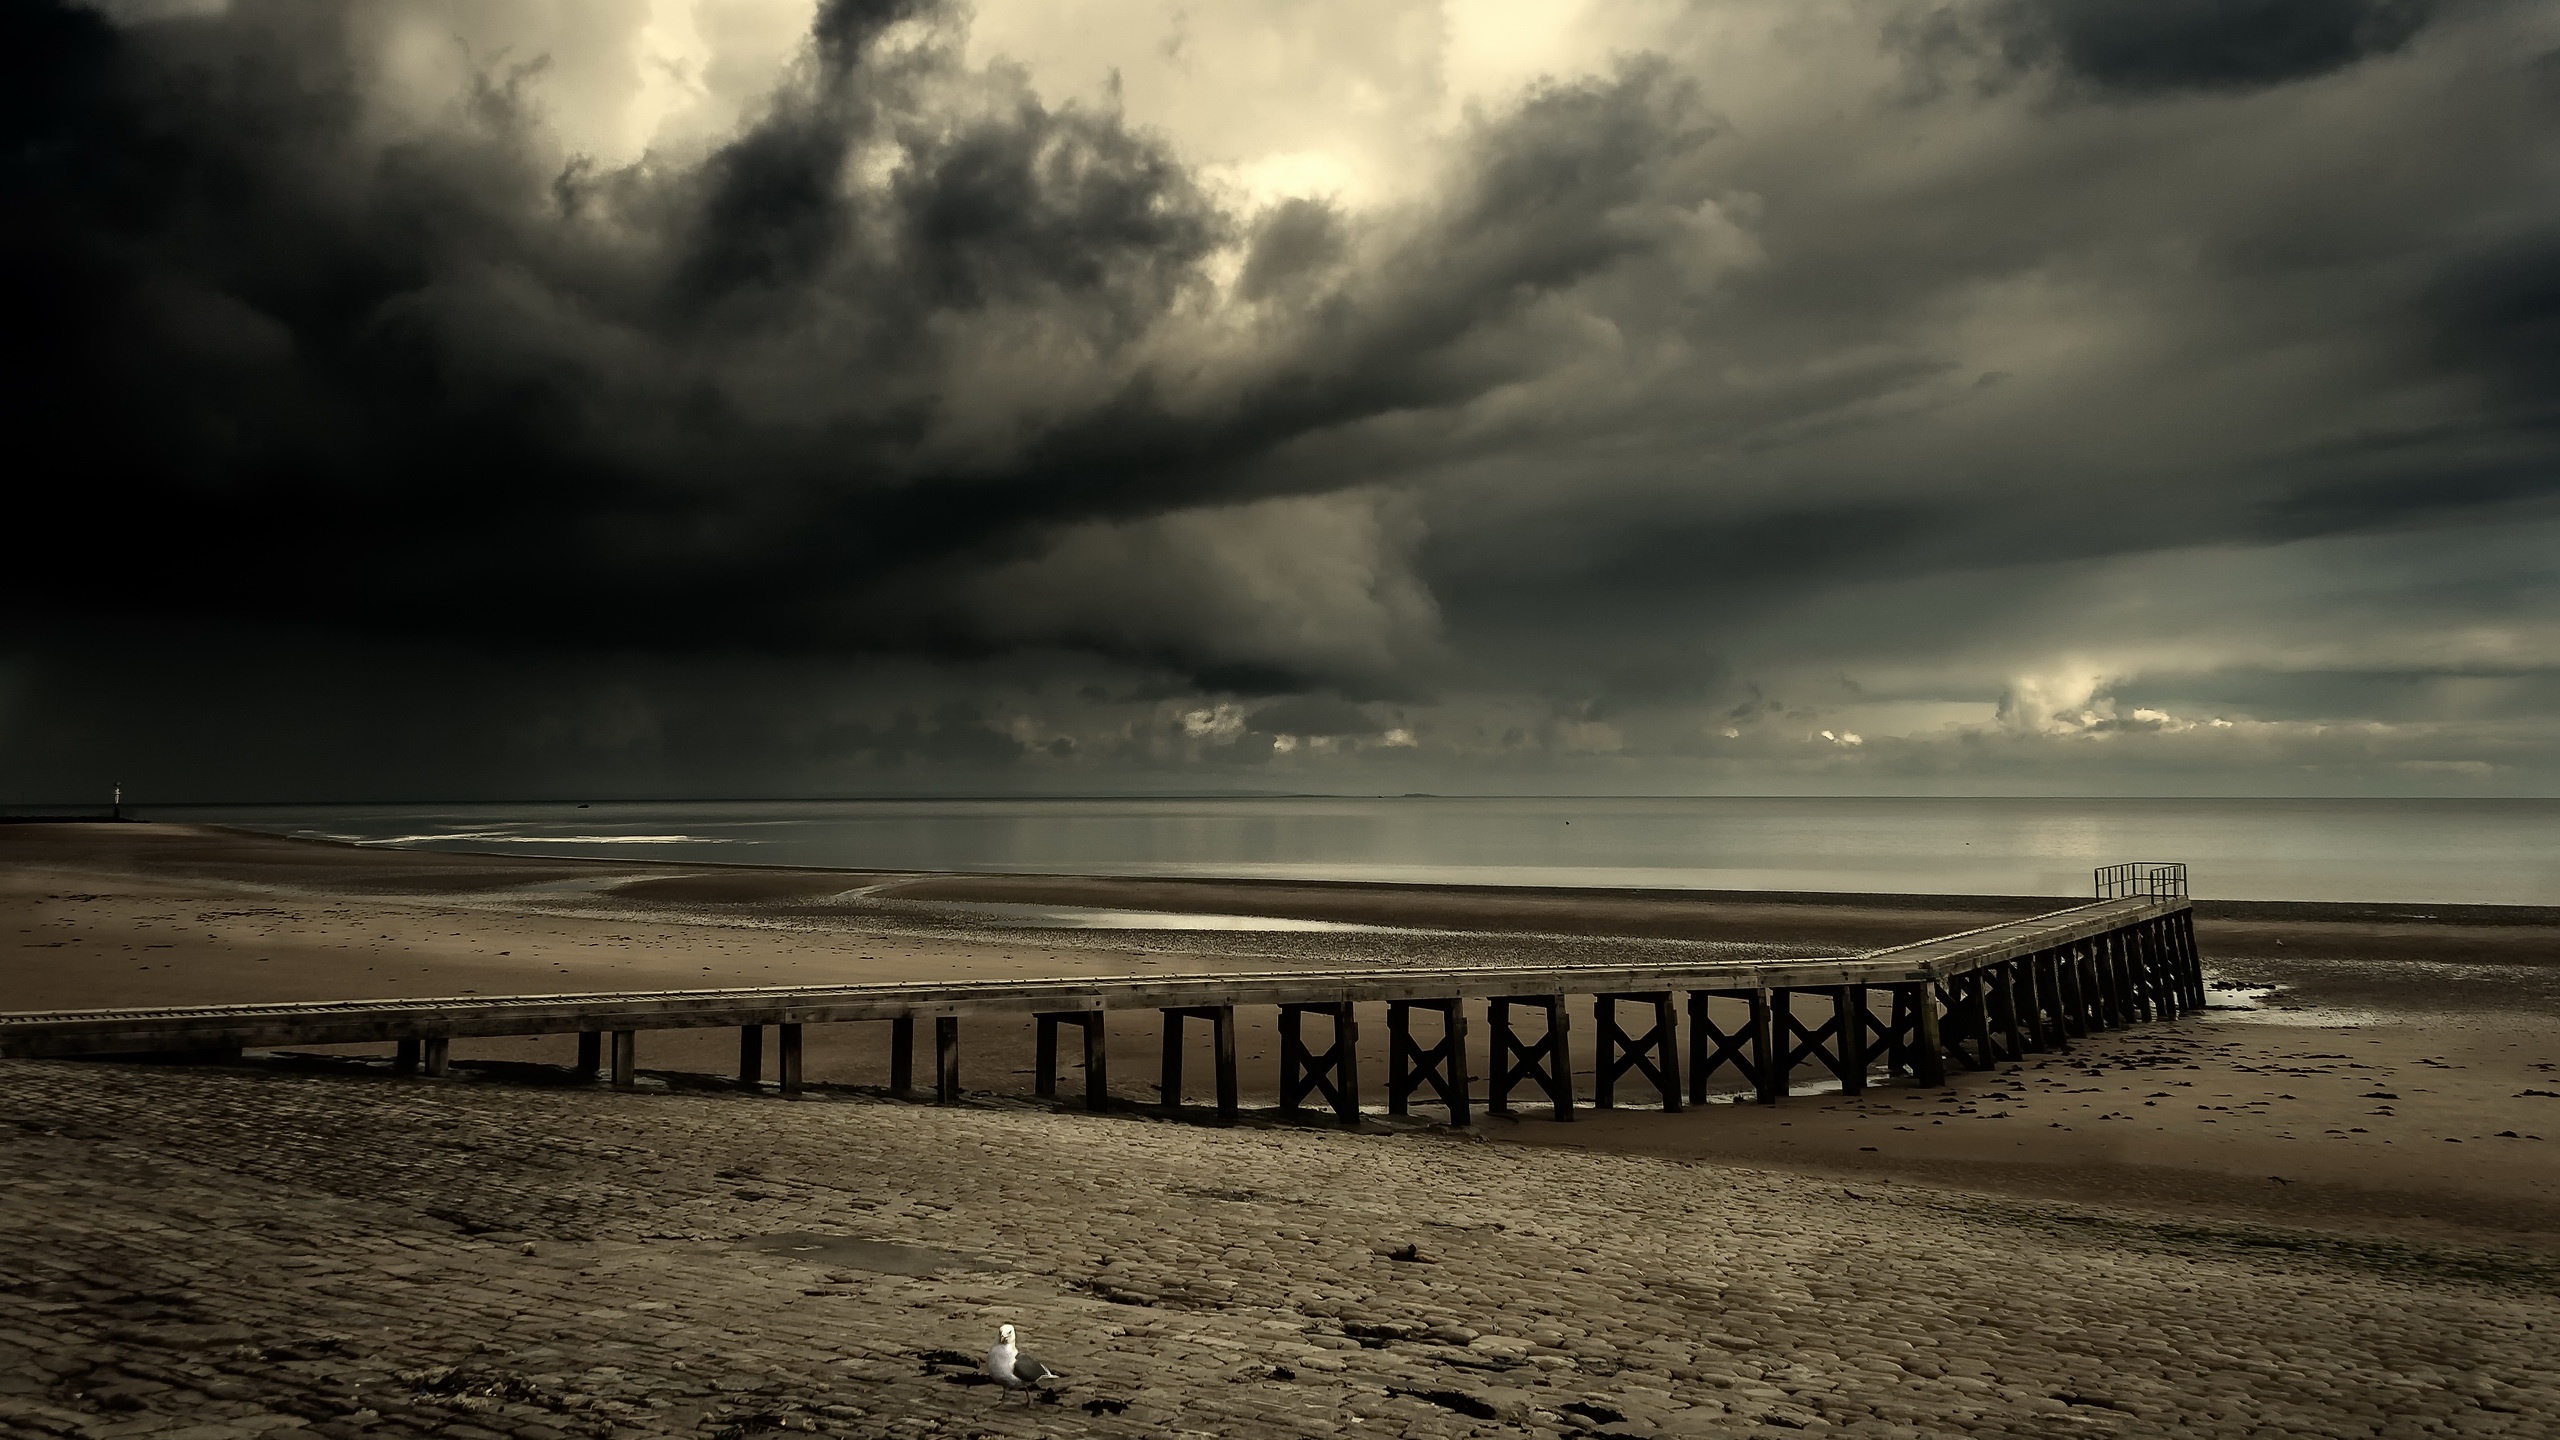 General 2560x1440 nature coast beach dark outdoors sky clouds pier